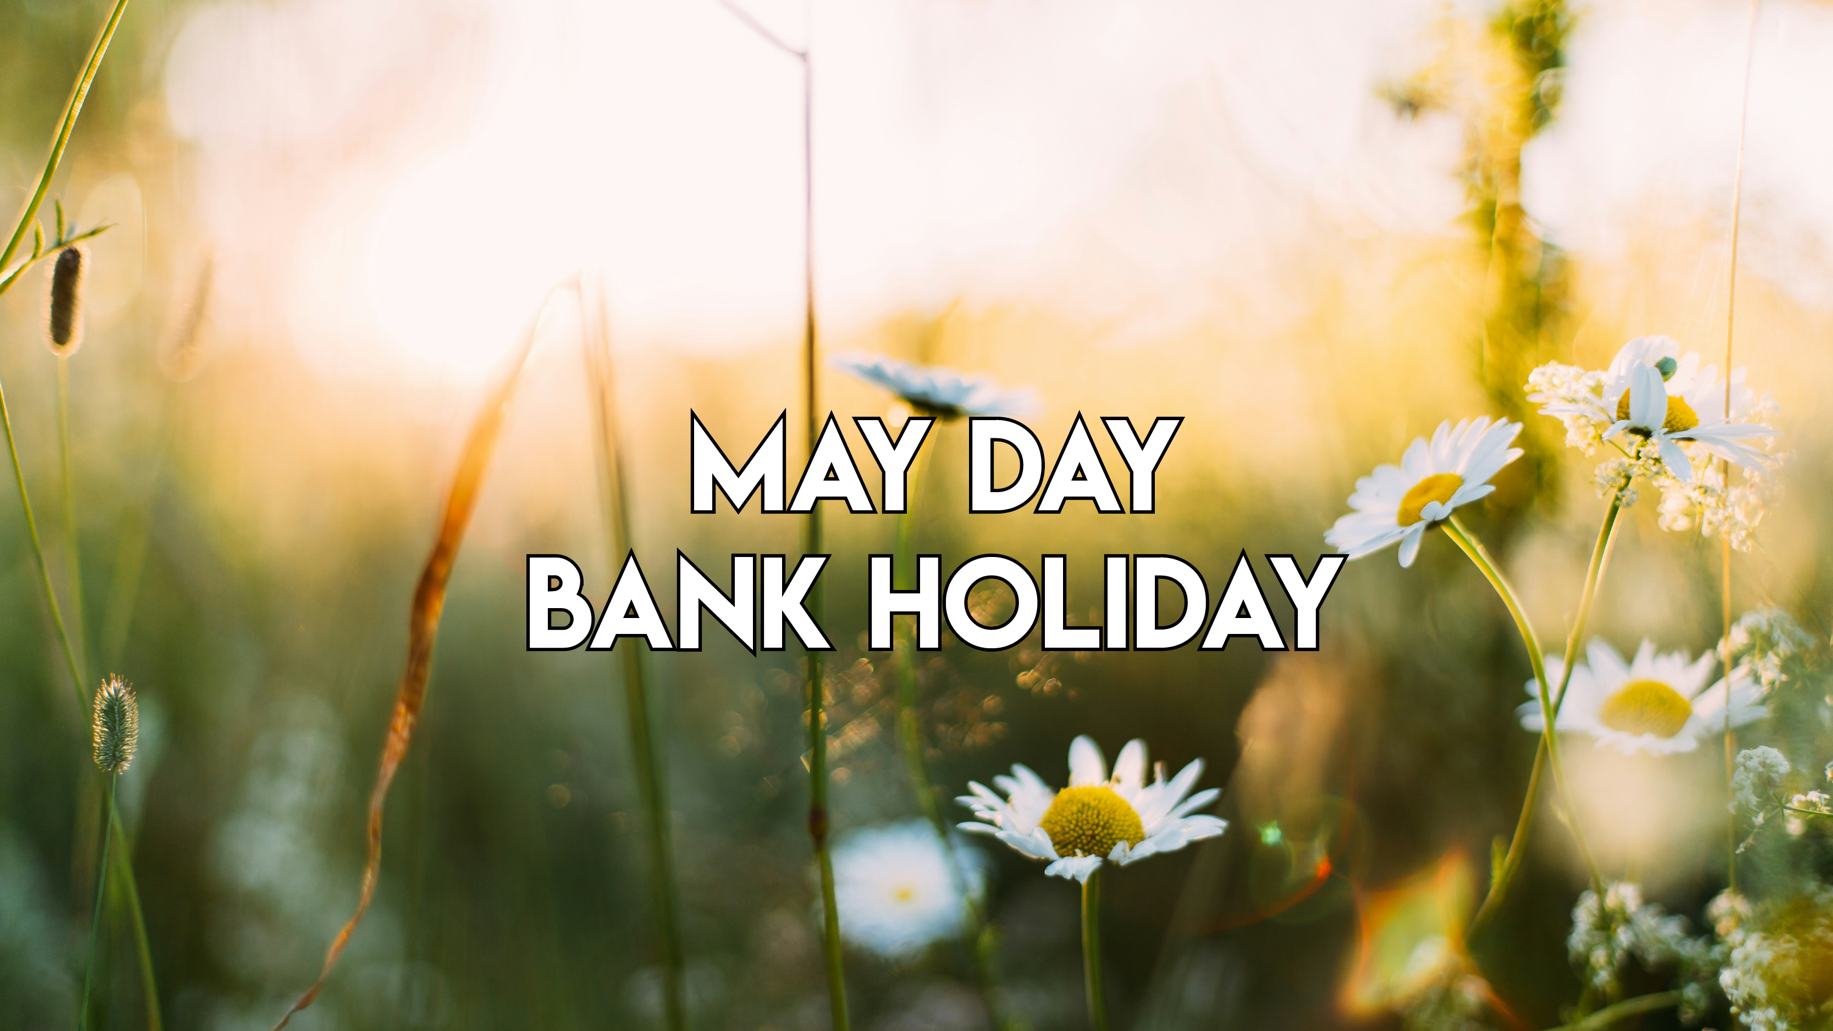 May Day Bank Holiday: We will be closed on Monday, 6th May.